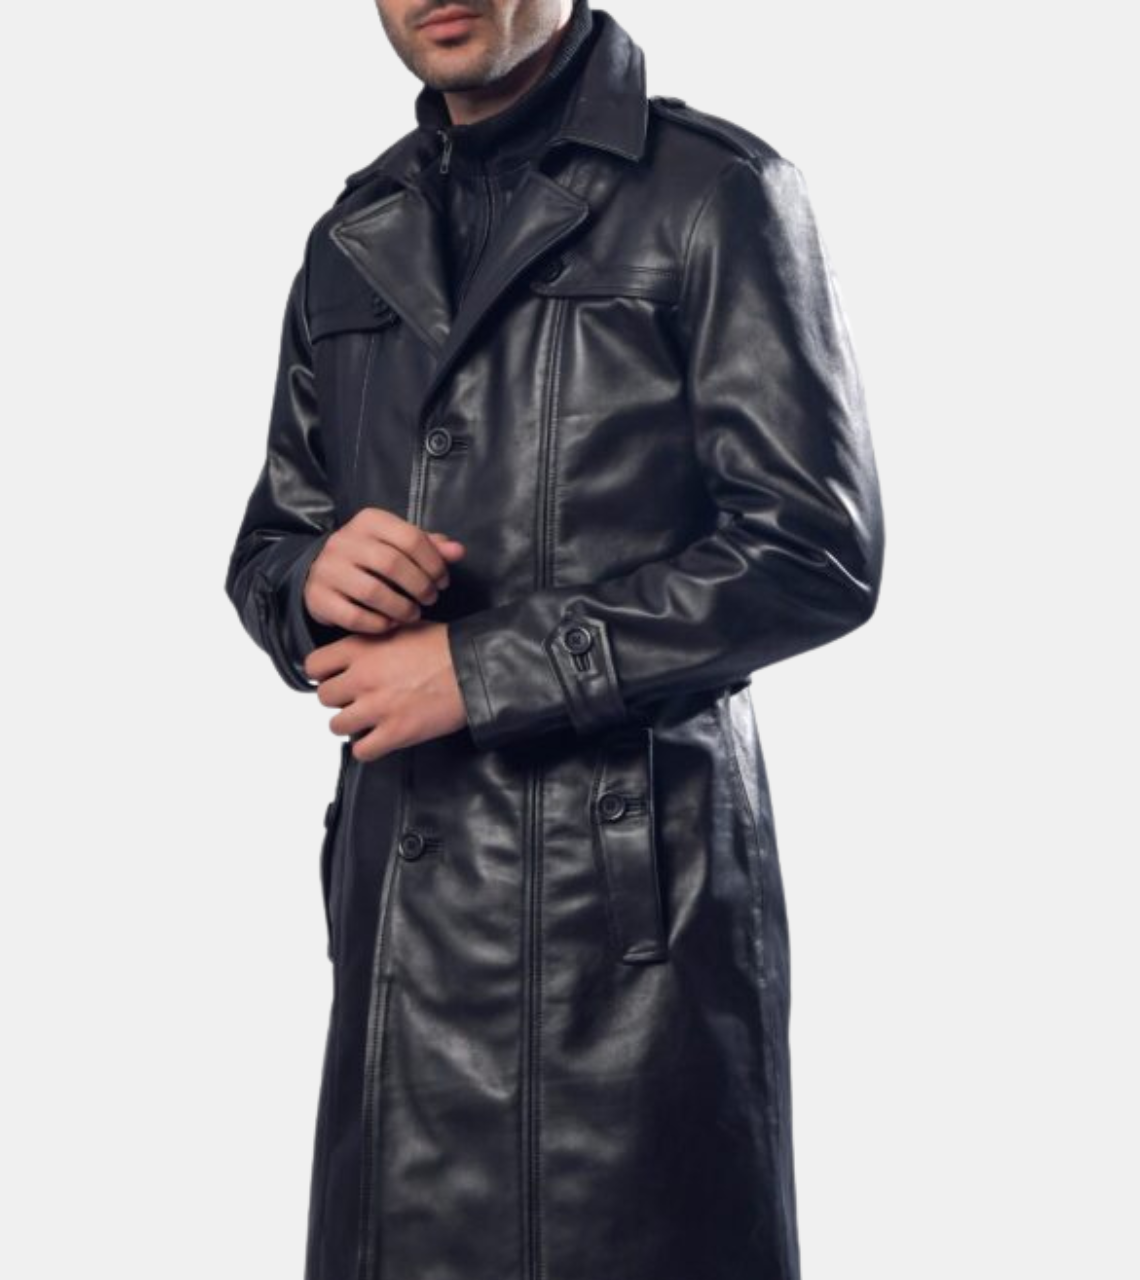 Bellamy Black Leather Trench Coat For Men's